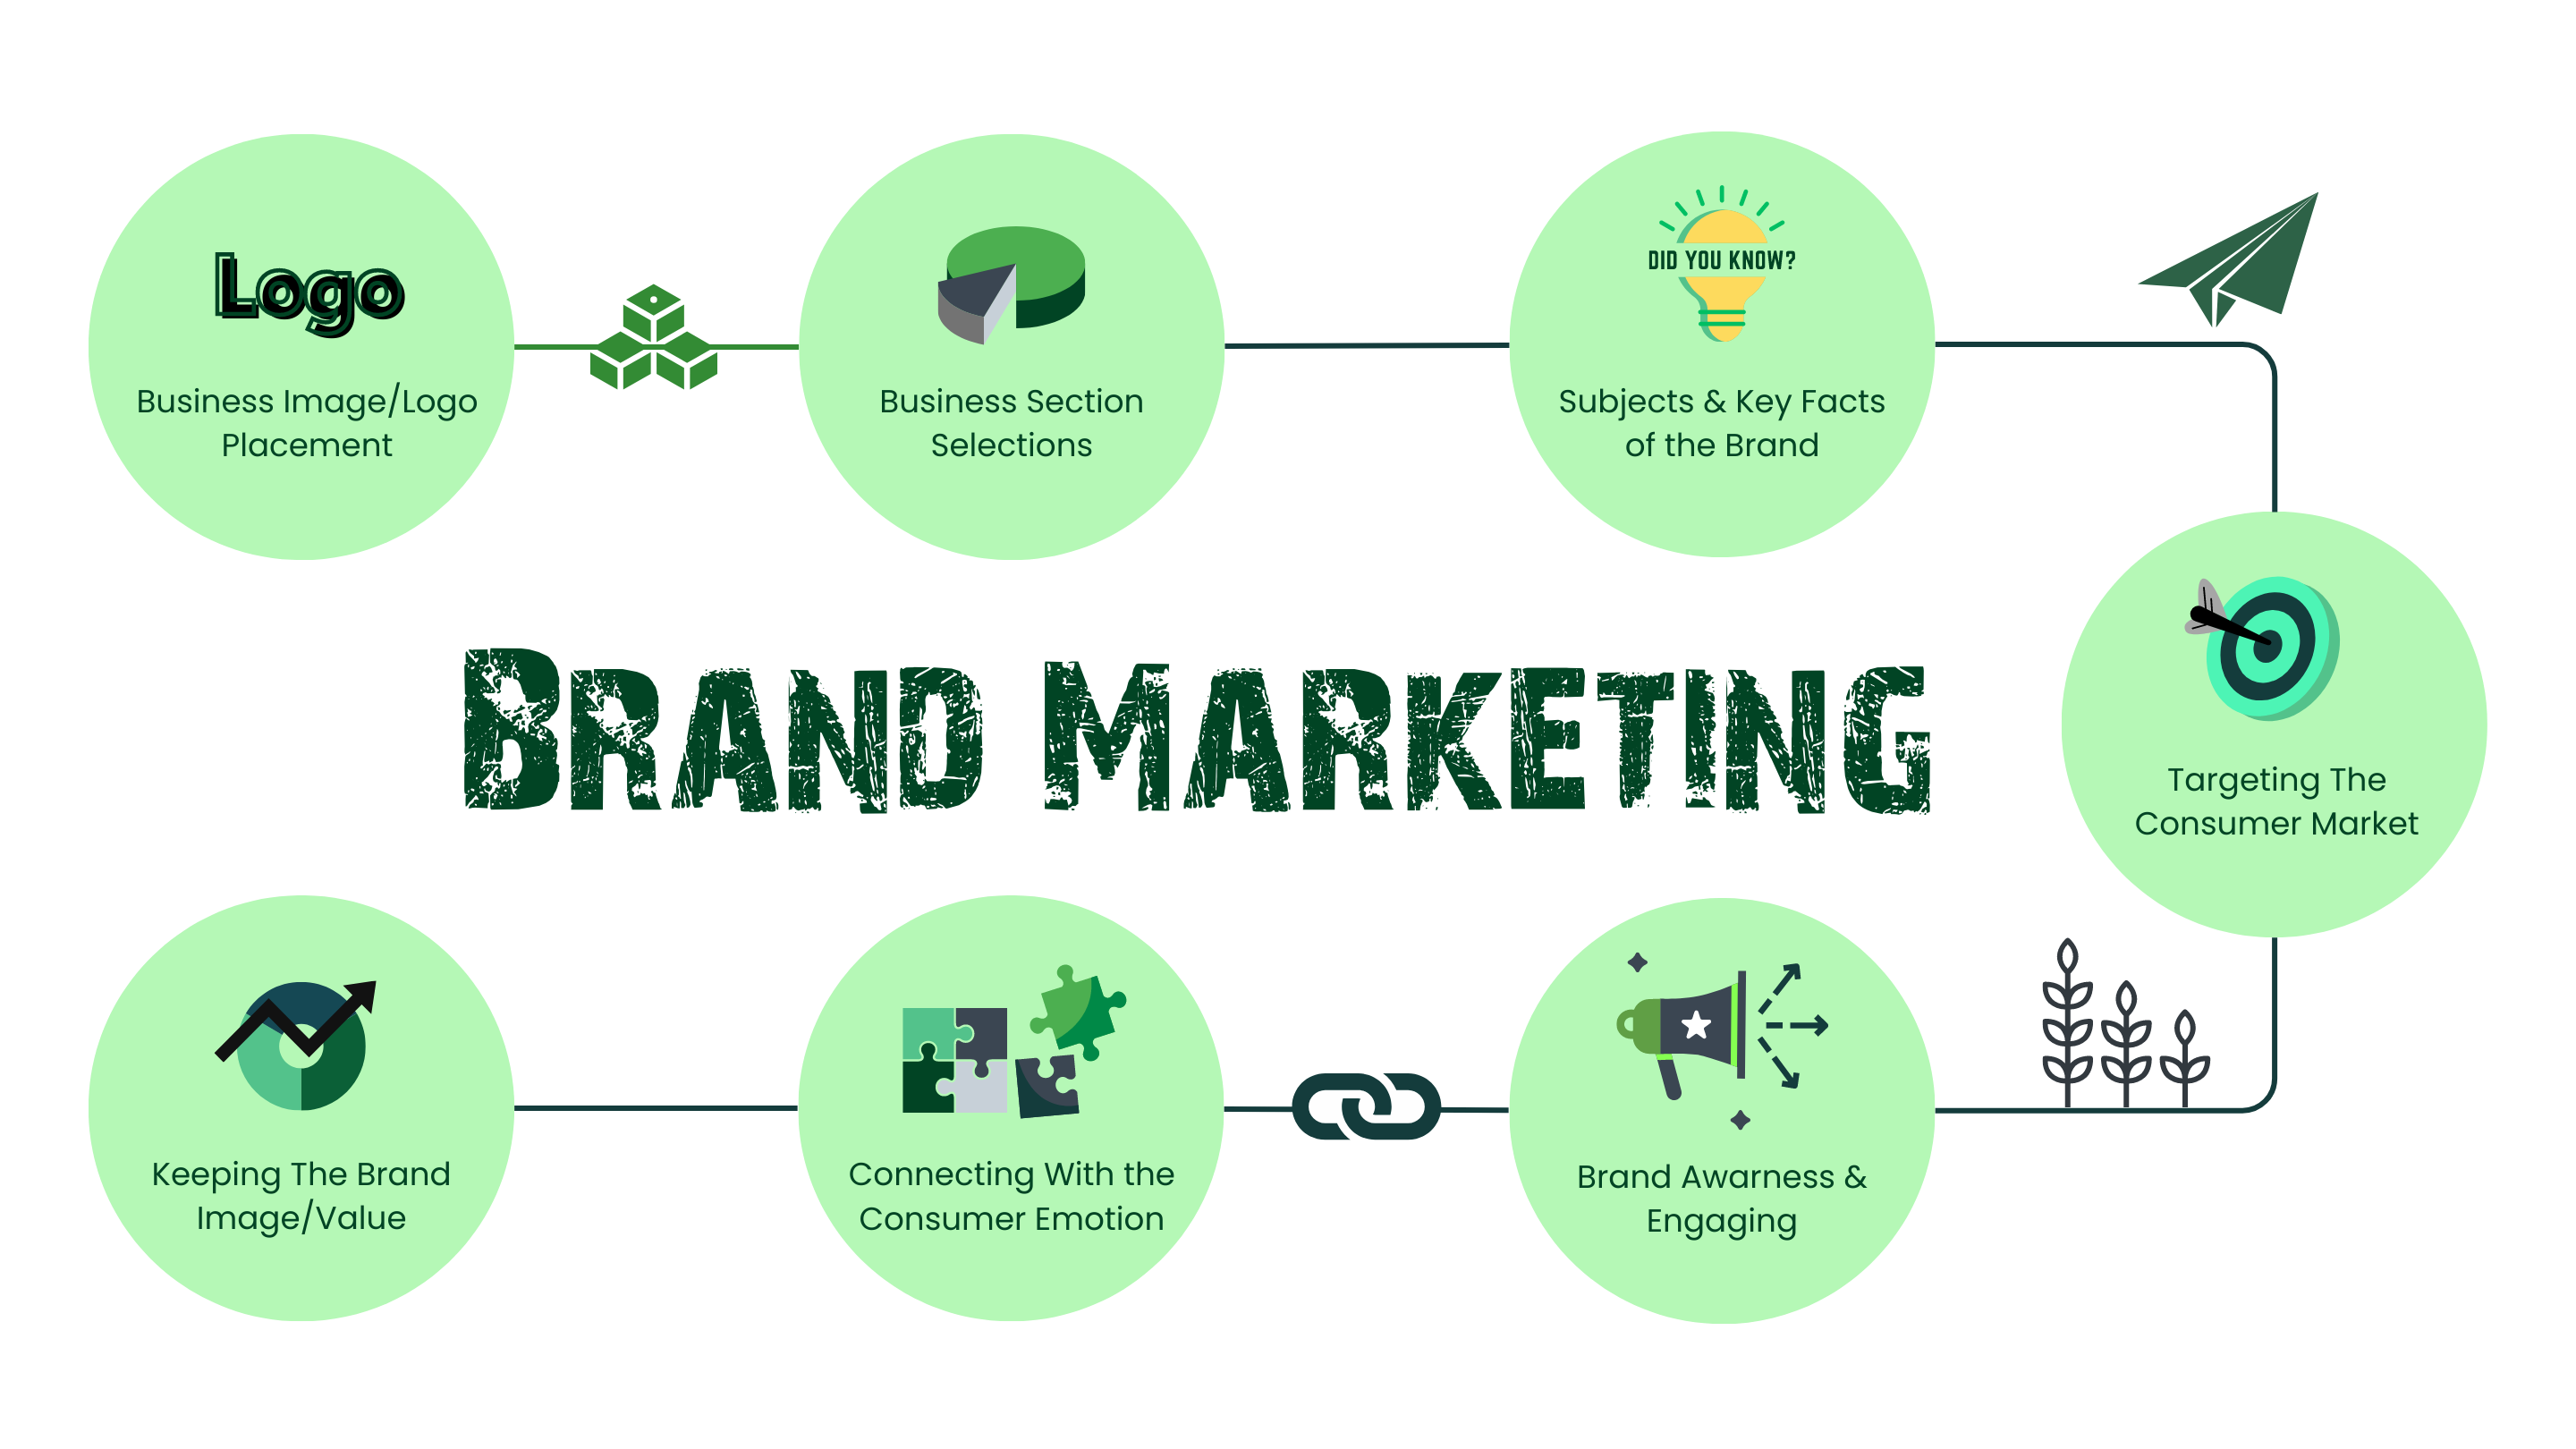 Brand Marketing Services, Grofa.net